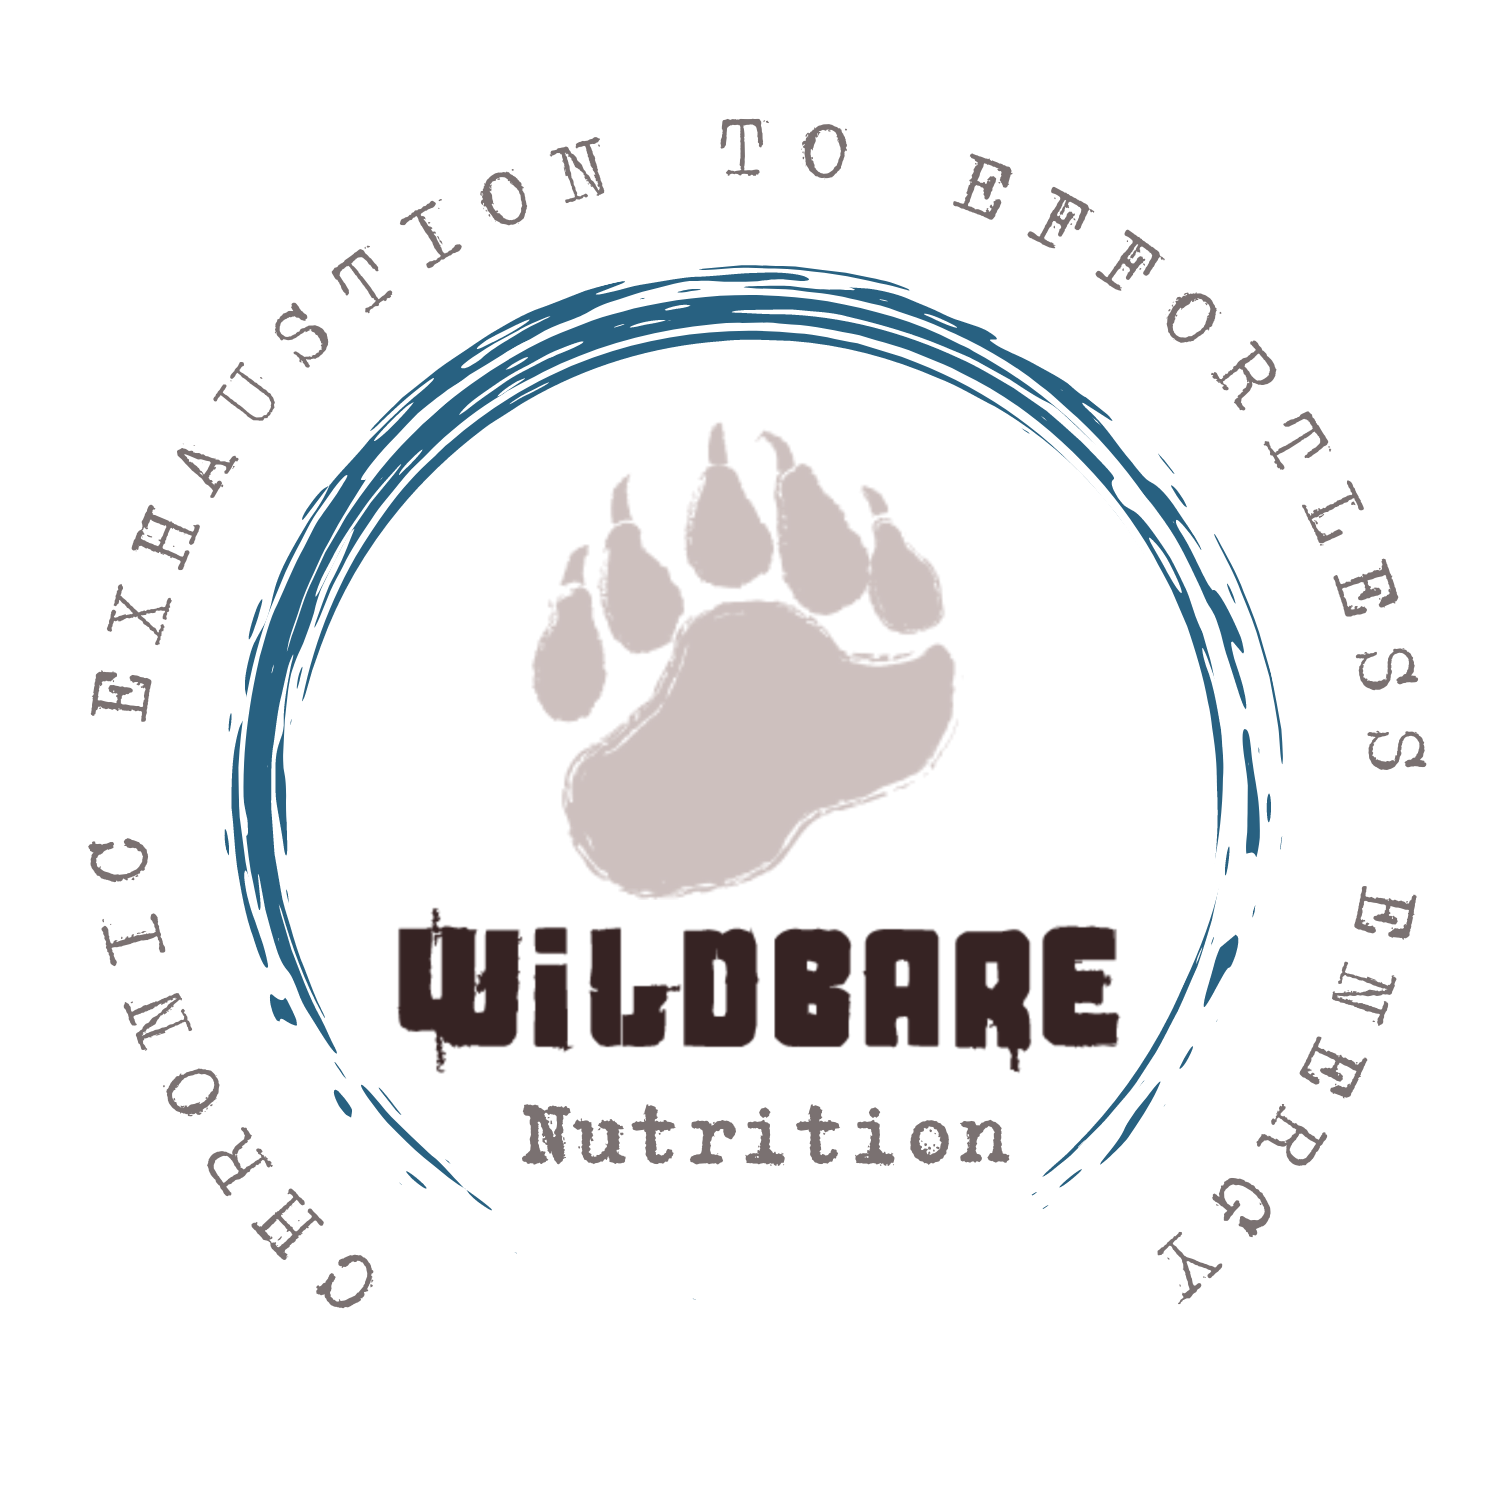 Wildbare Nutrition